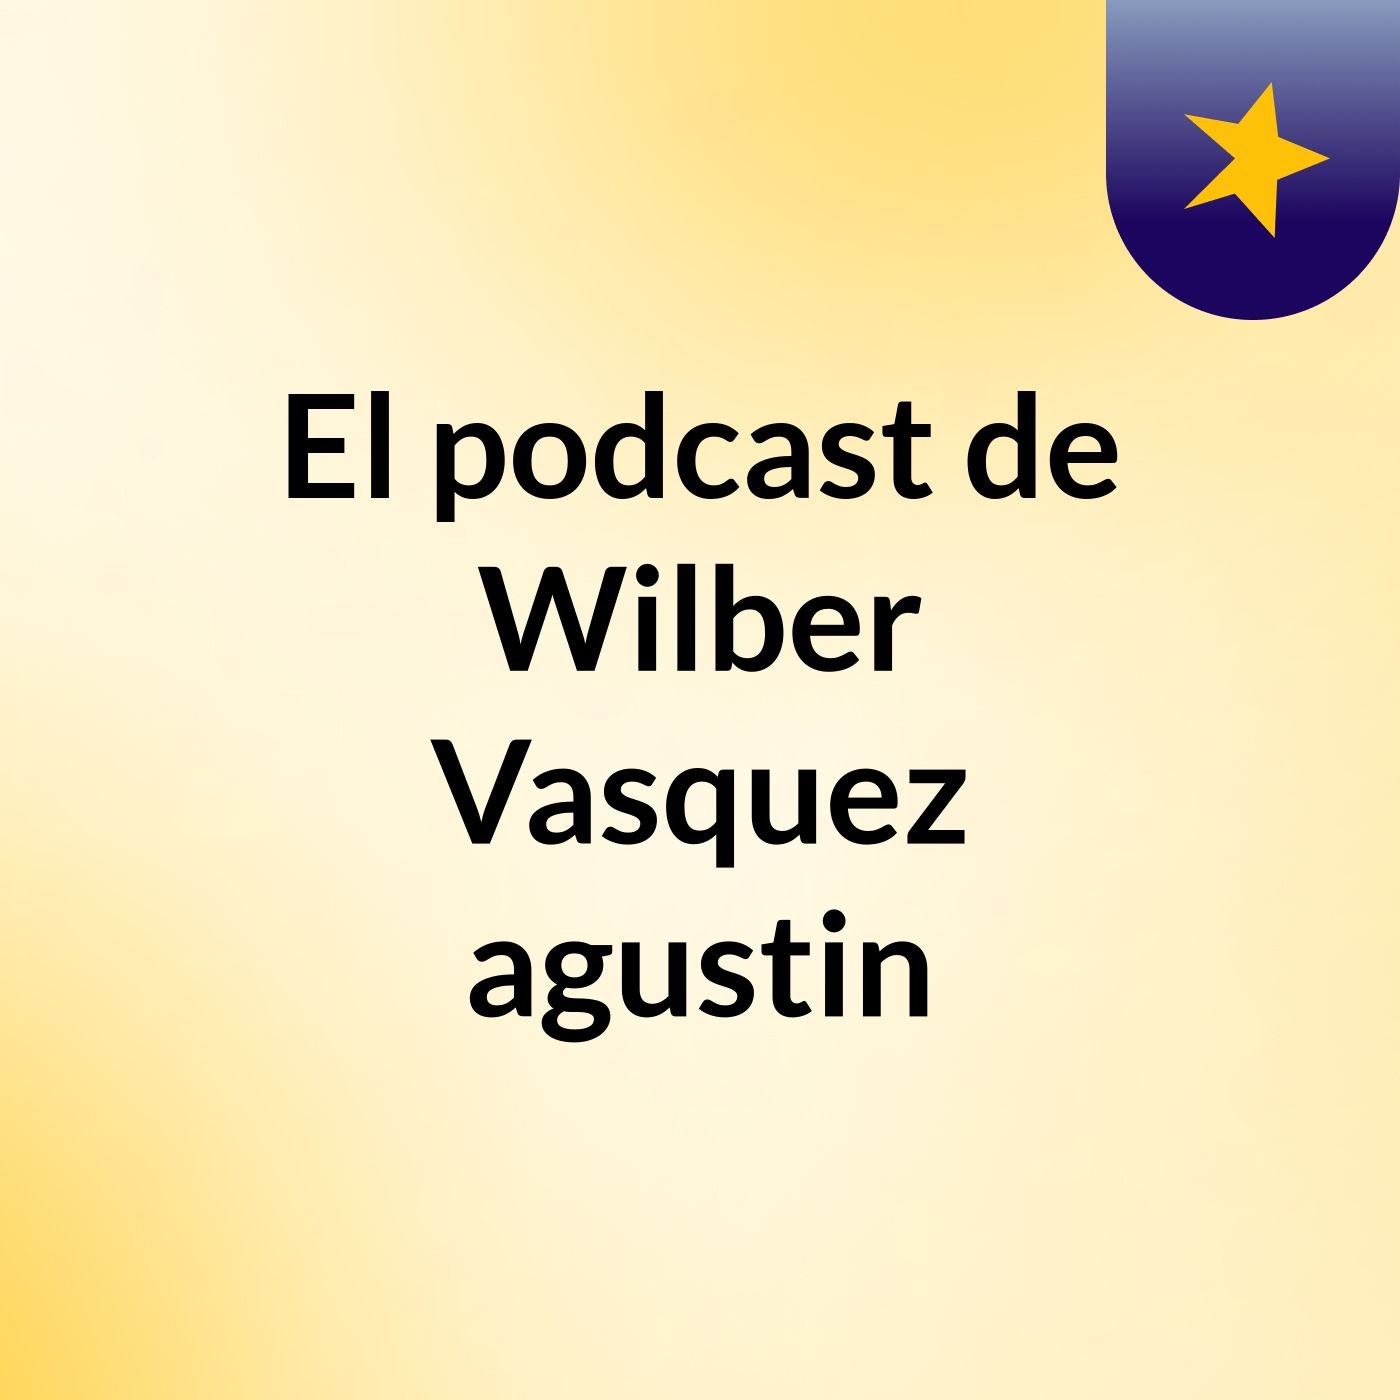 El podcast de Wilber Vasquez agustin